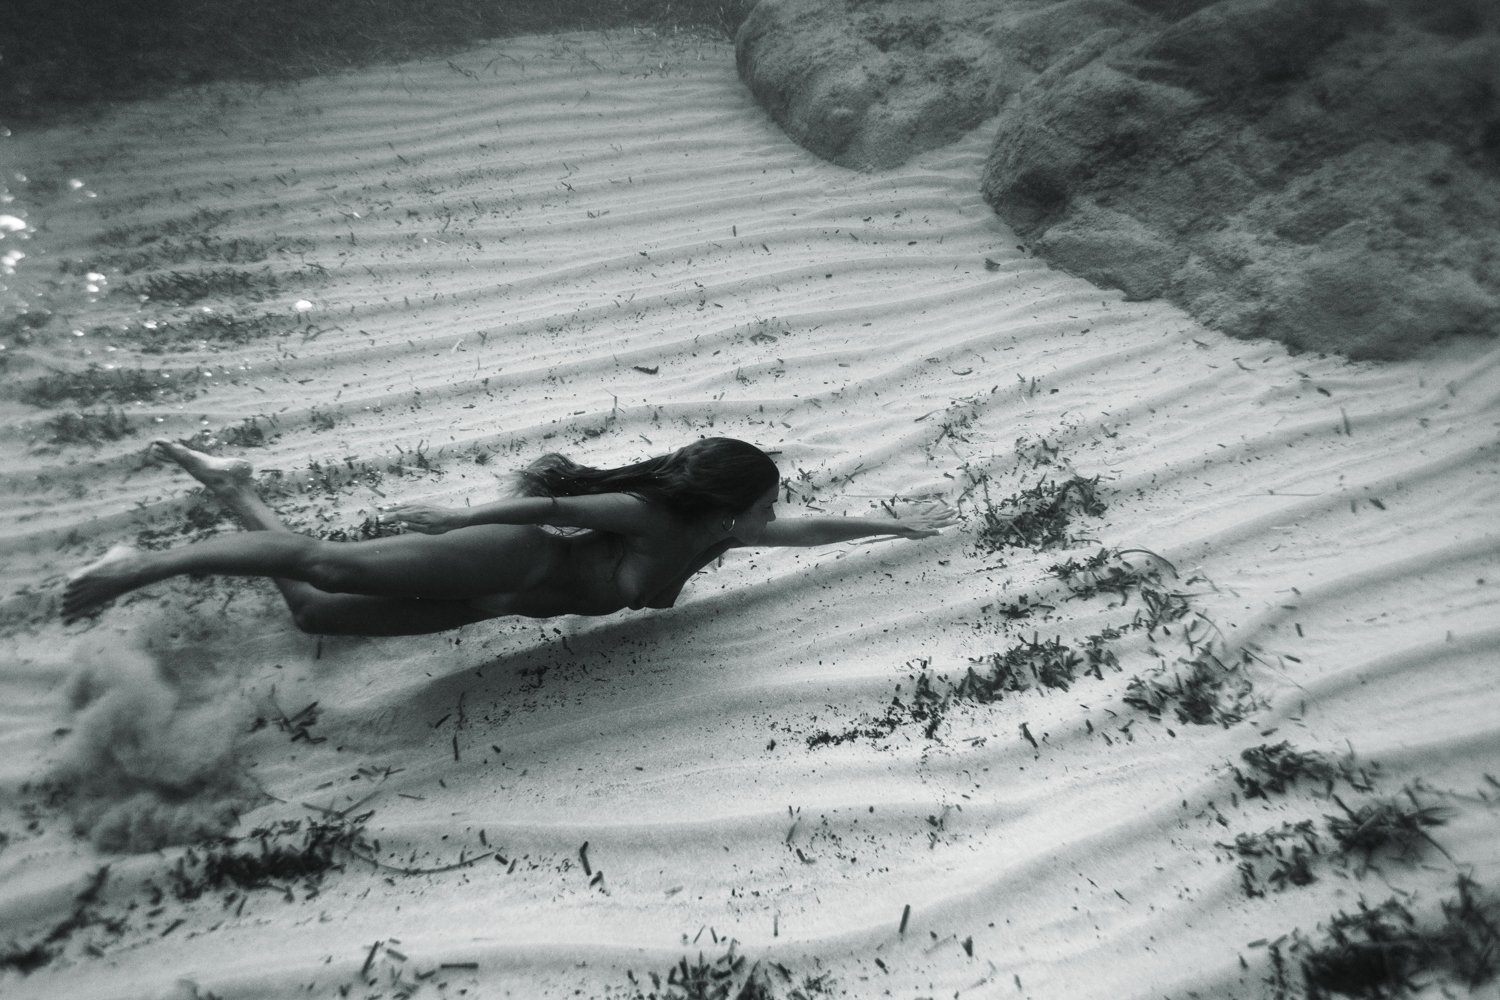 siren sirens corse corsica underwater photography photographe sous leau mermaid femme woman women nude nue fine art photography Krista Espino ajaccio sea Mediterranean france travel-44.jpg